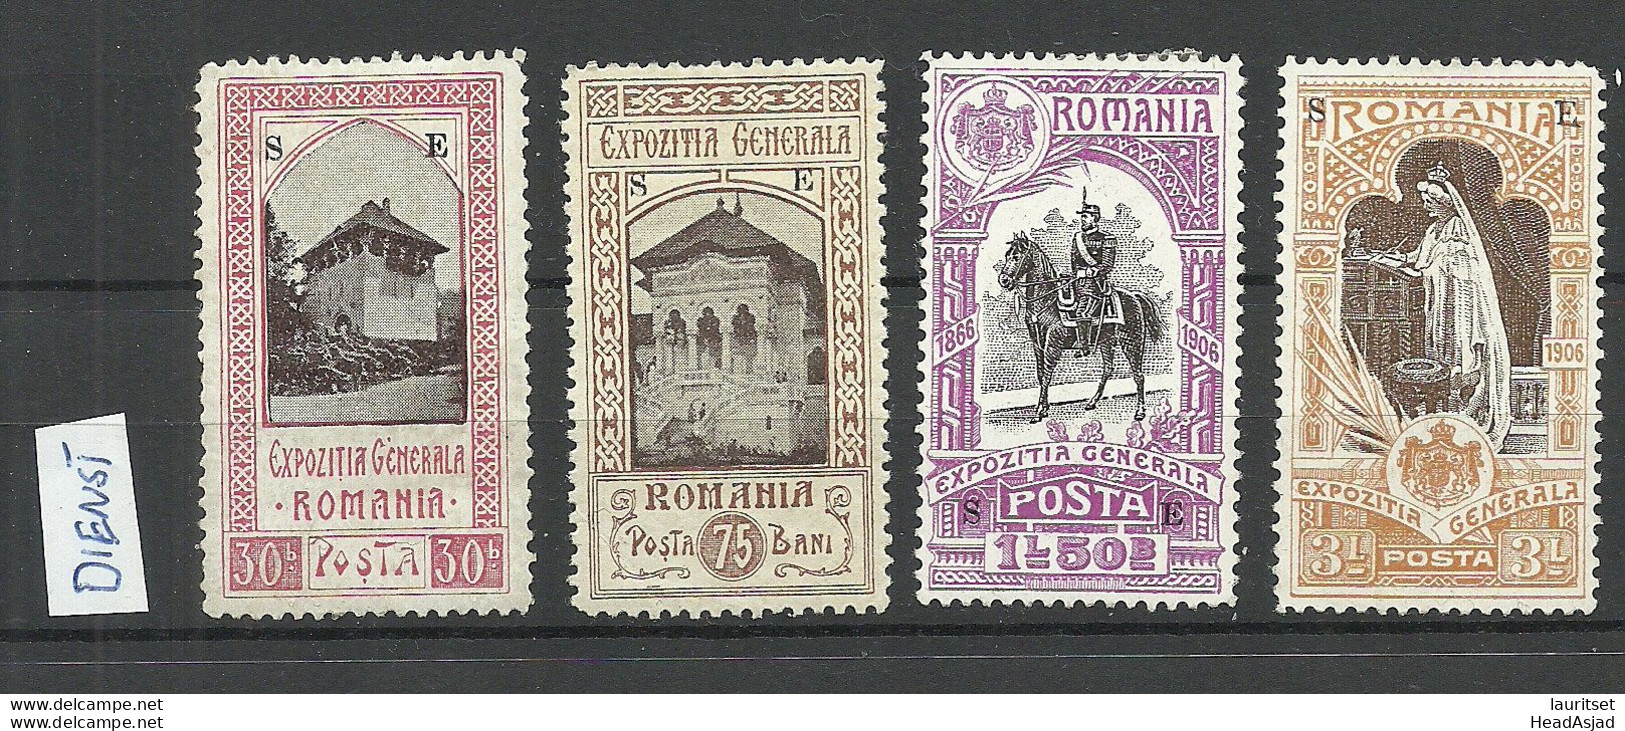 ROMANIA Rumänien 1906 - 4 Dienstmarke EXPOZITIA GENERALA With OPT "SE" * - Service